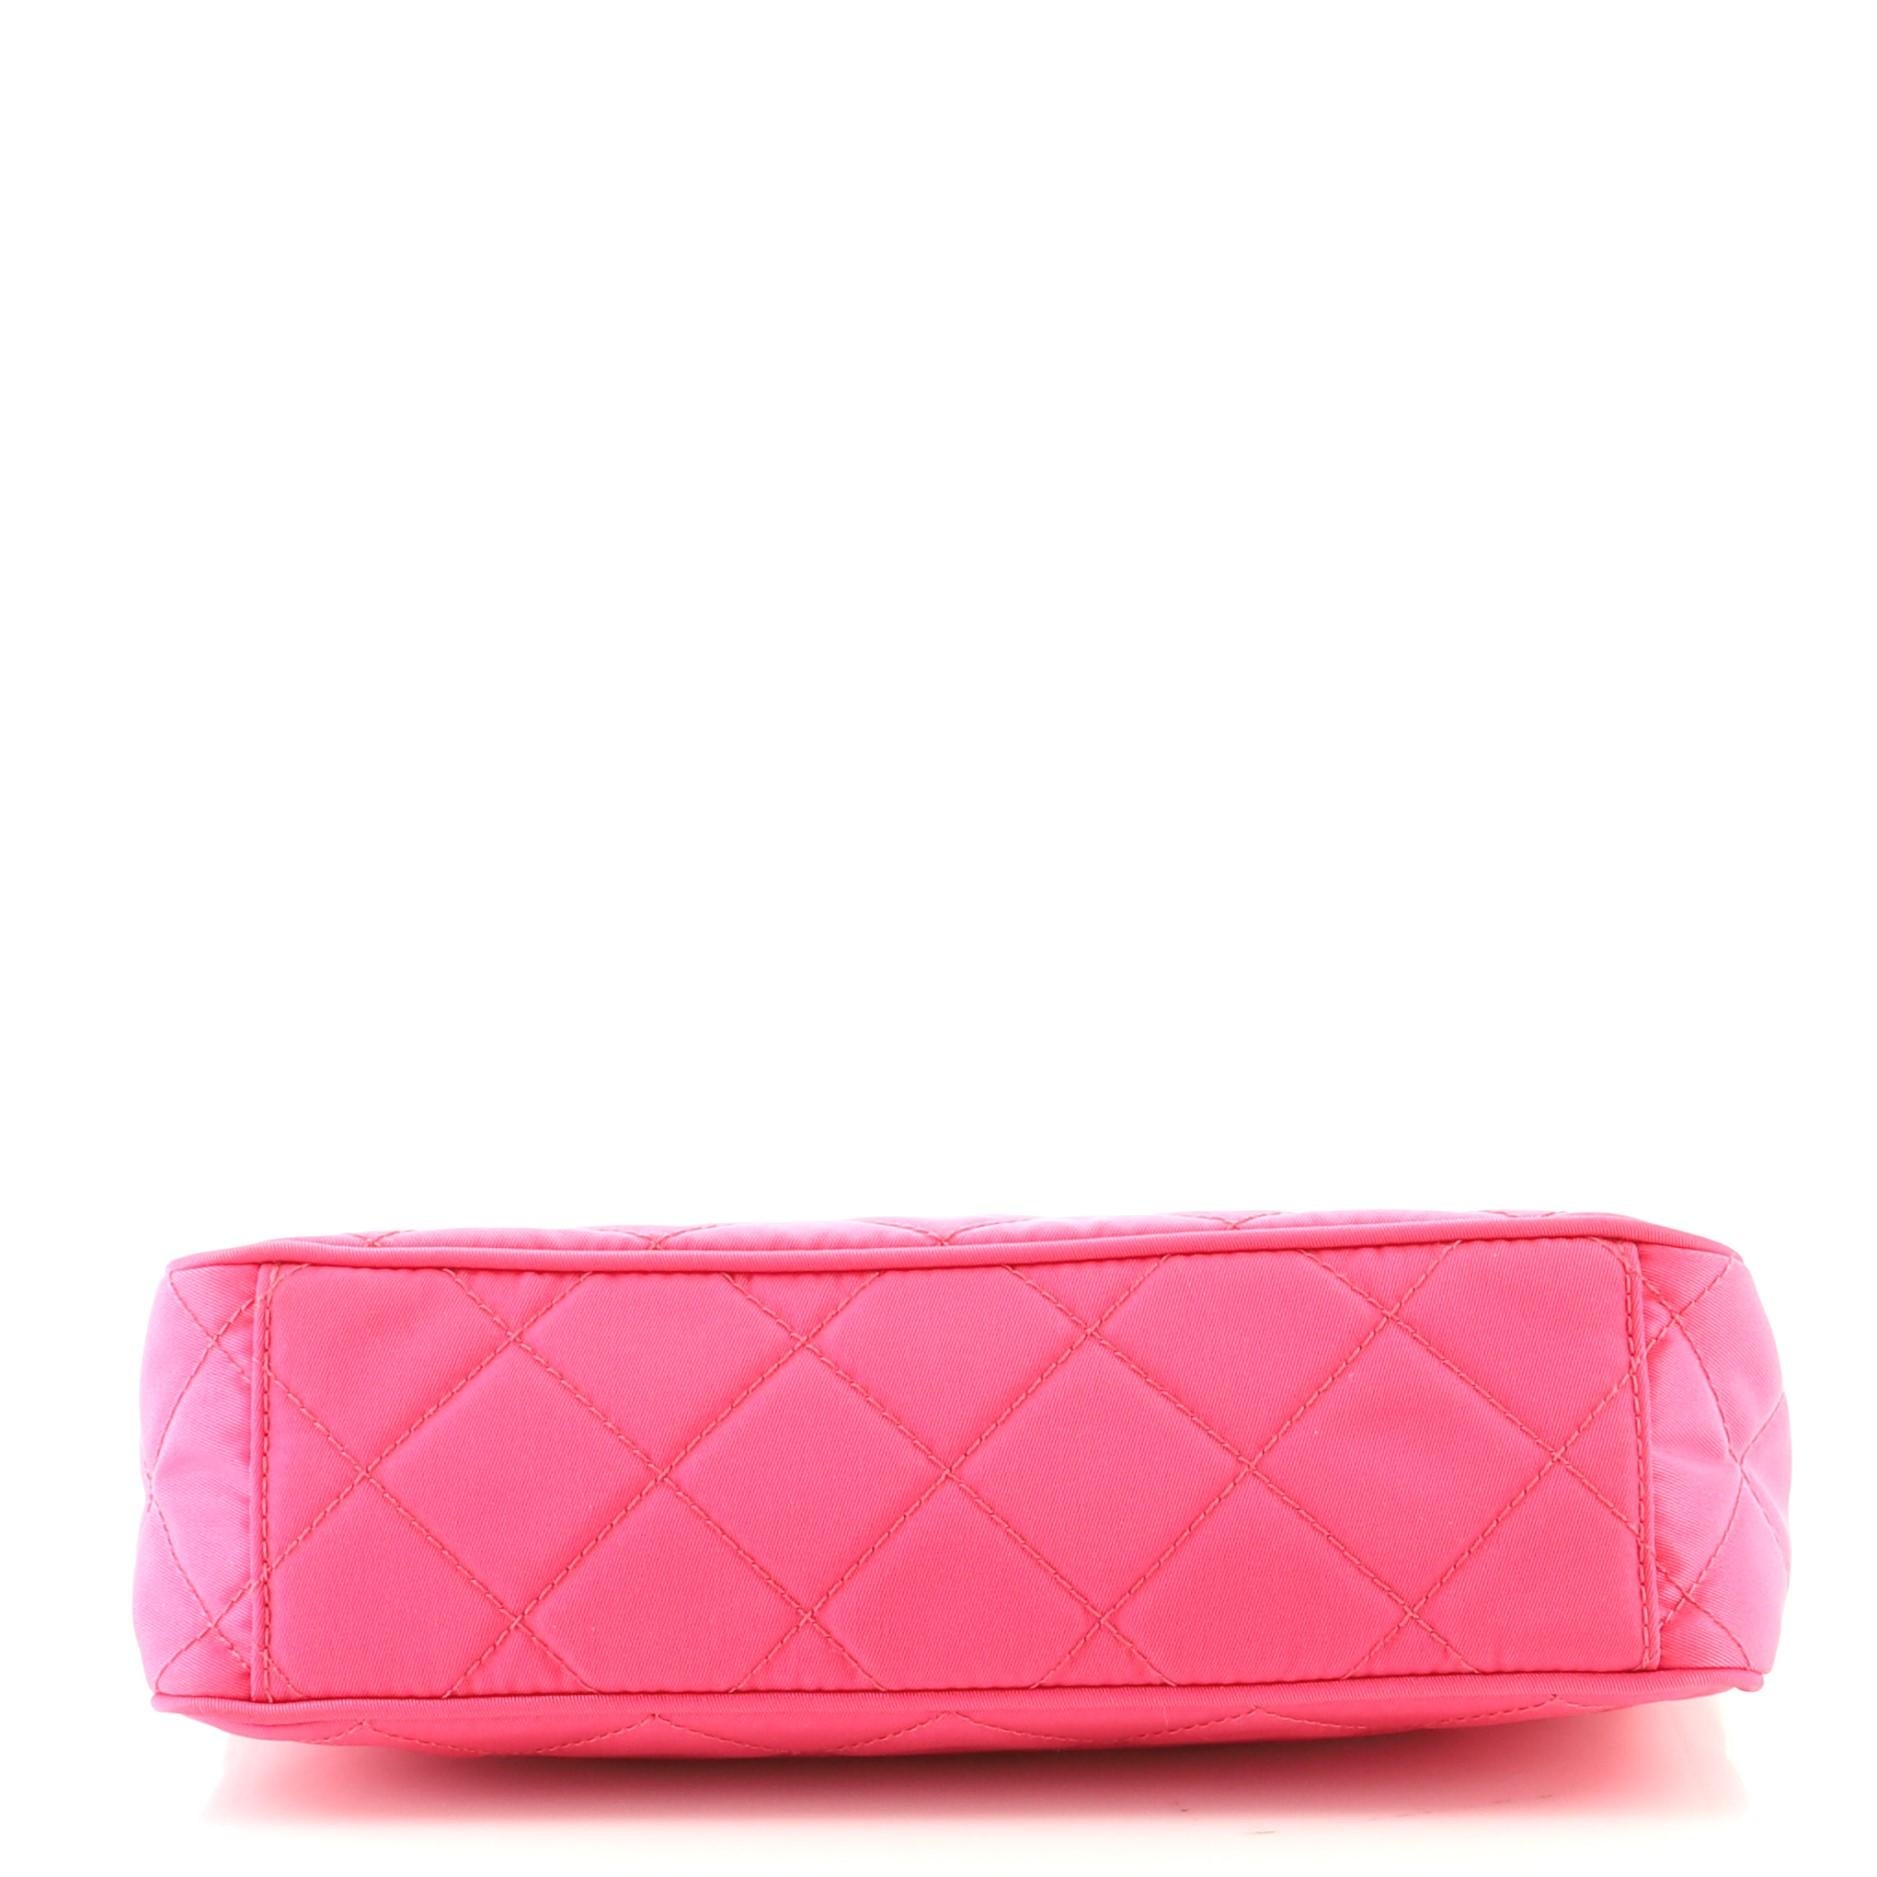 pink prada clutch bag